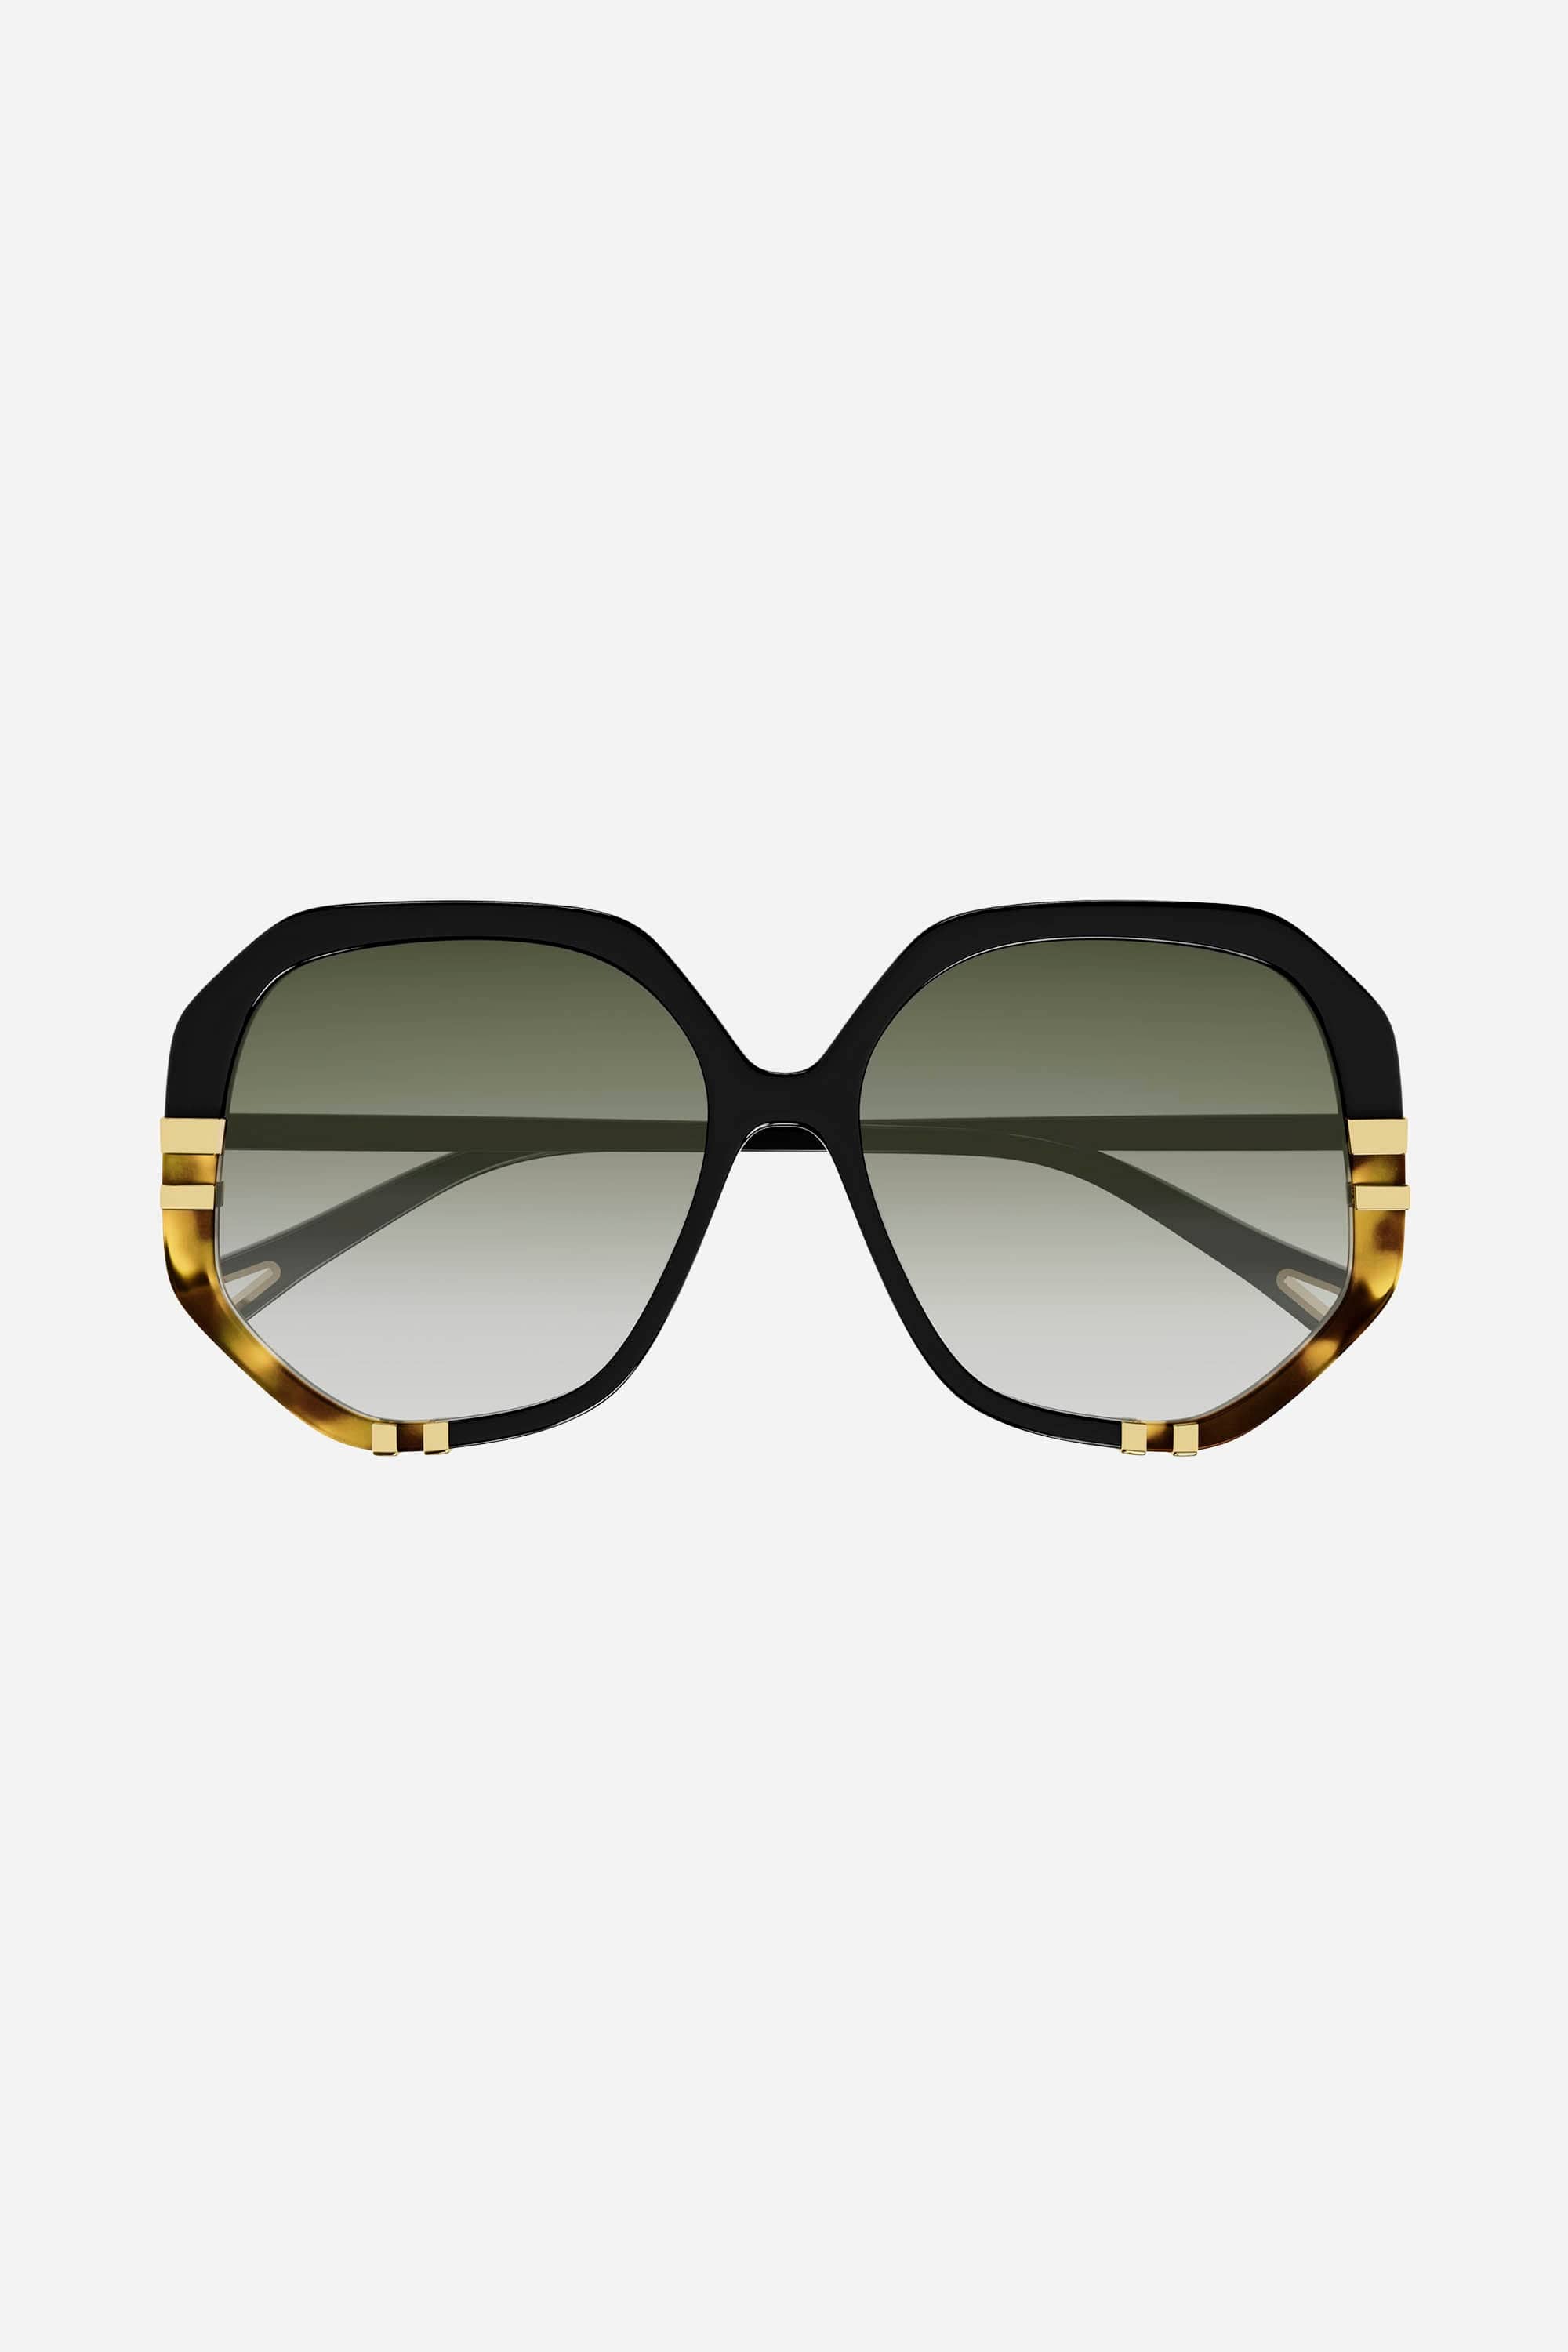 Chloé geometric dark havana shades sunglasses - Eyewear Club